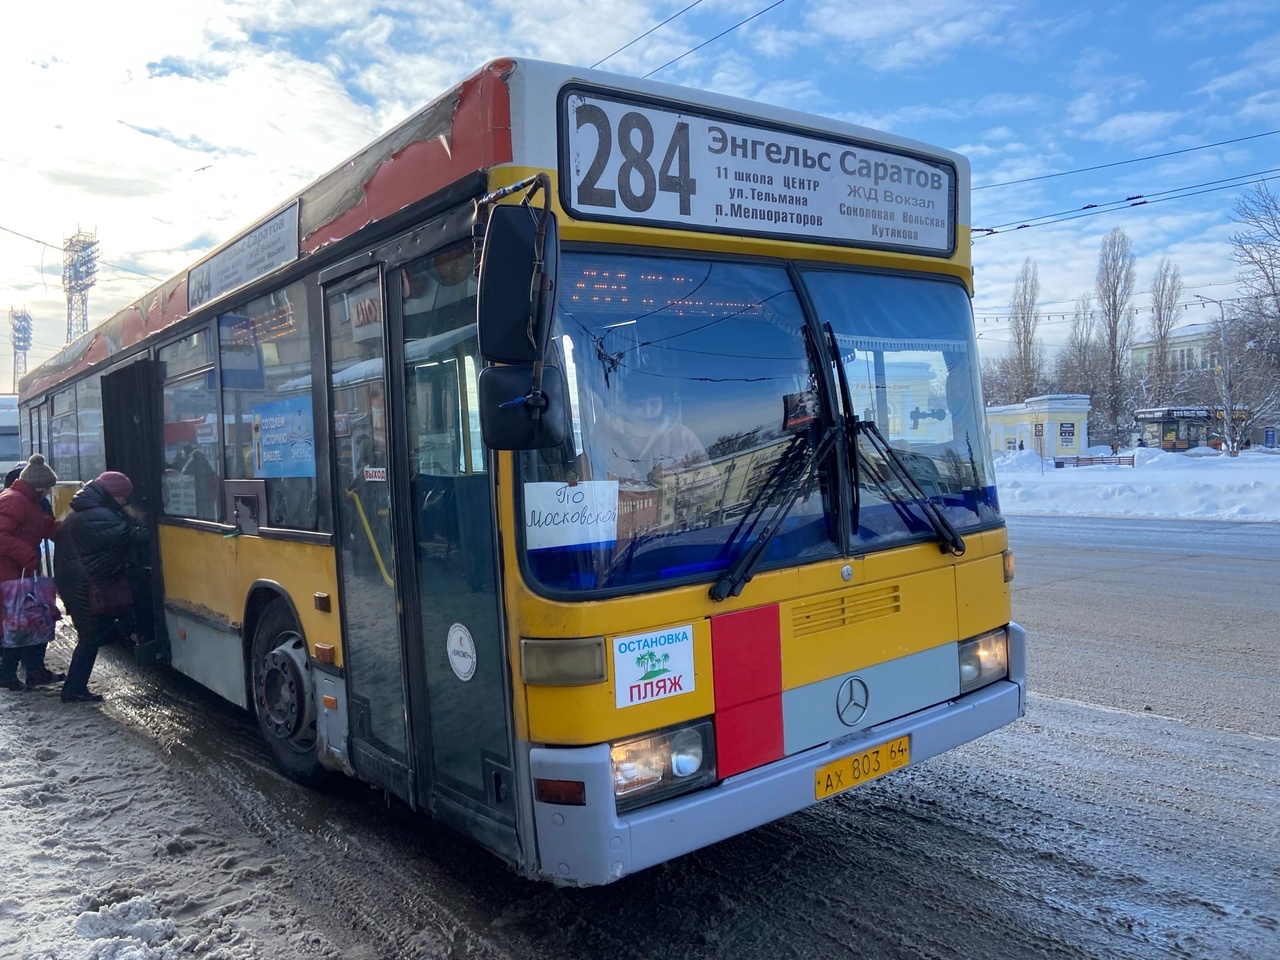 автобус 284.jpg